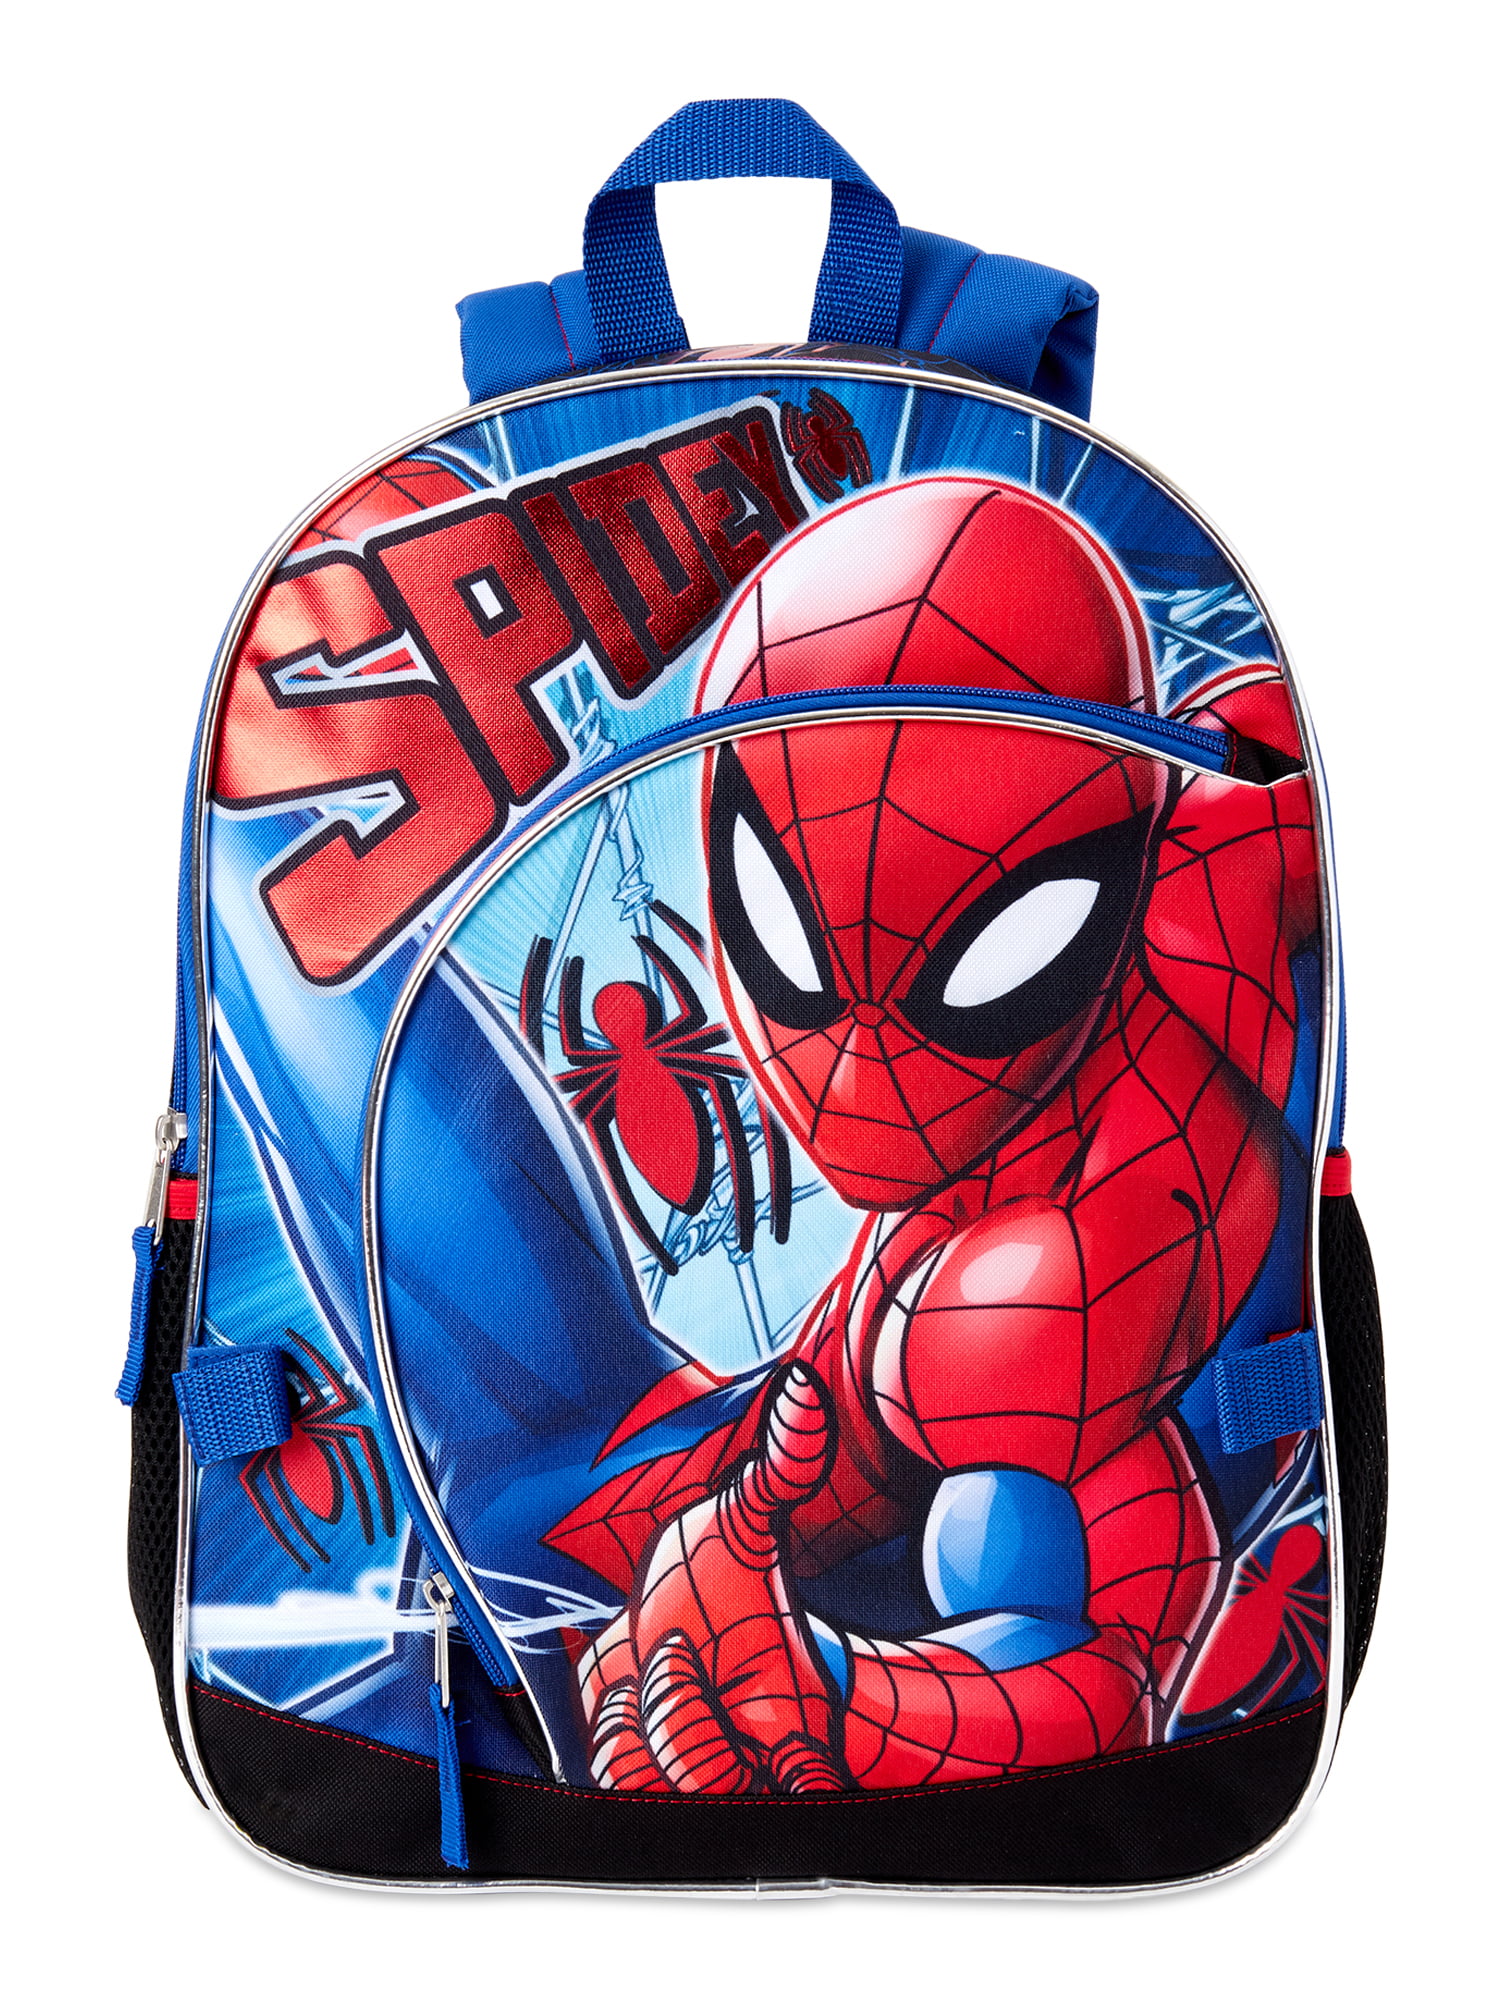 Spider-Man Large Backpack with Lunch Bag - Walmart.com - Walmart.com